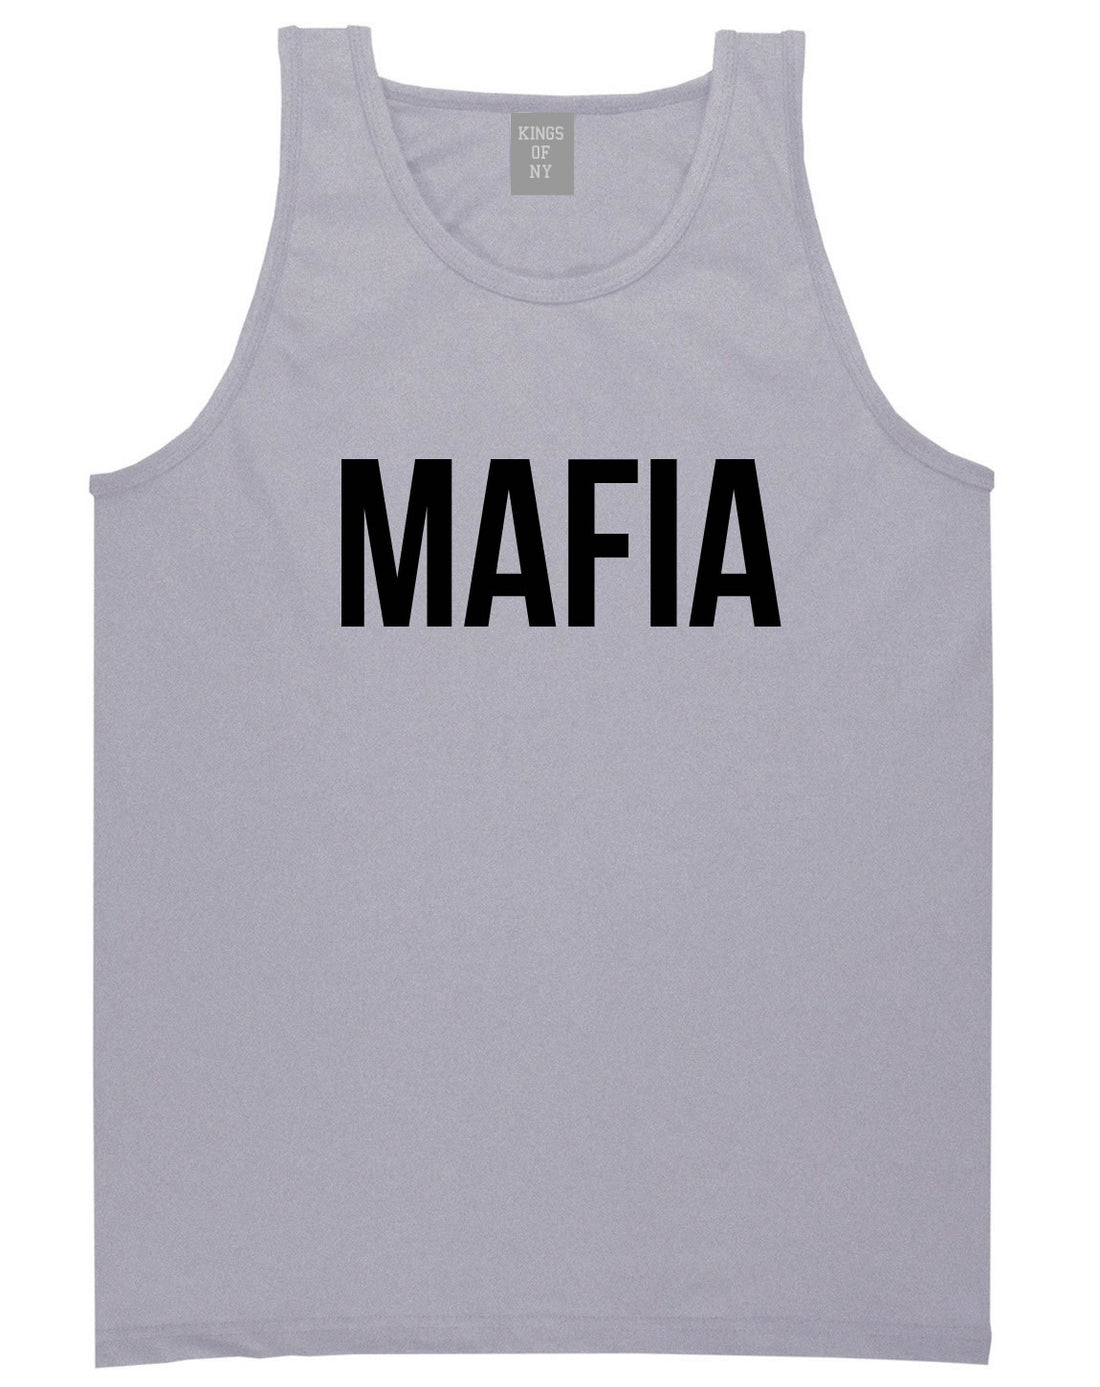 Mafia Junior Italian Mob  Tank Top in Grey By Kings Of NY